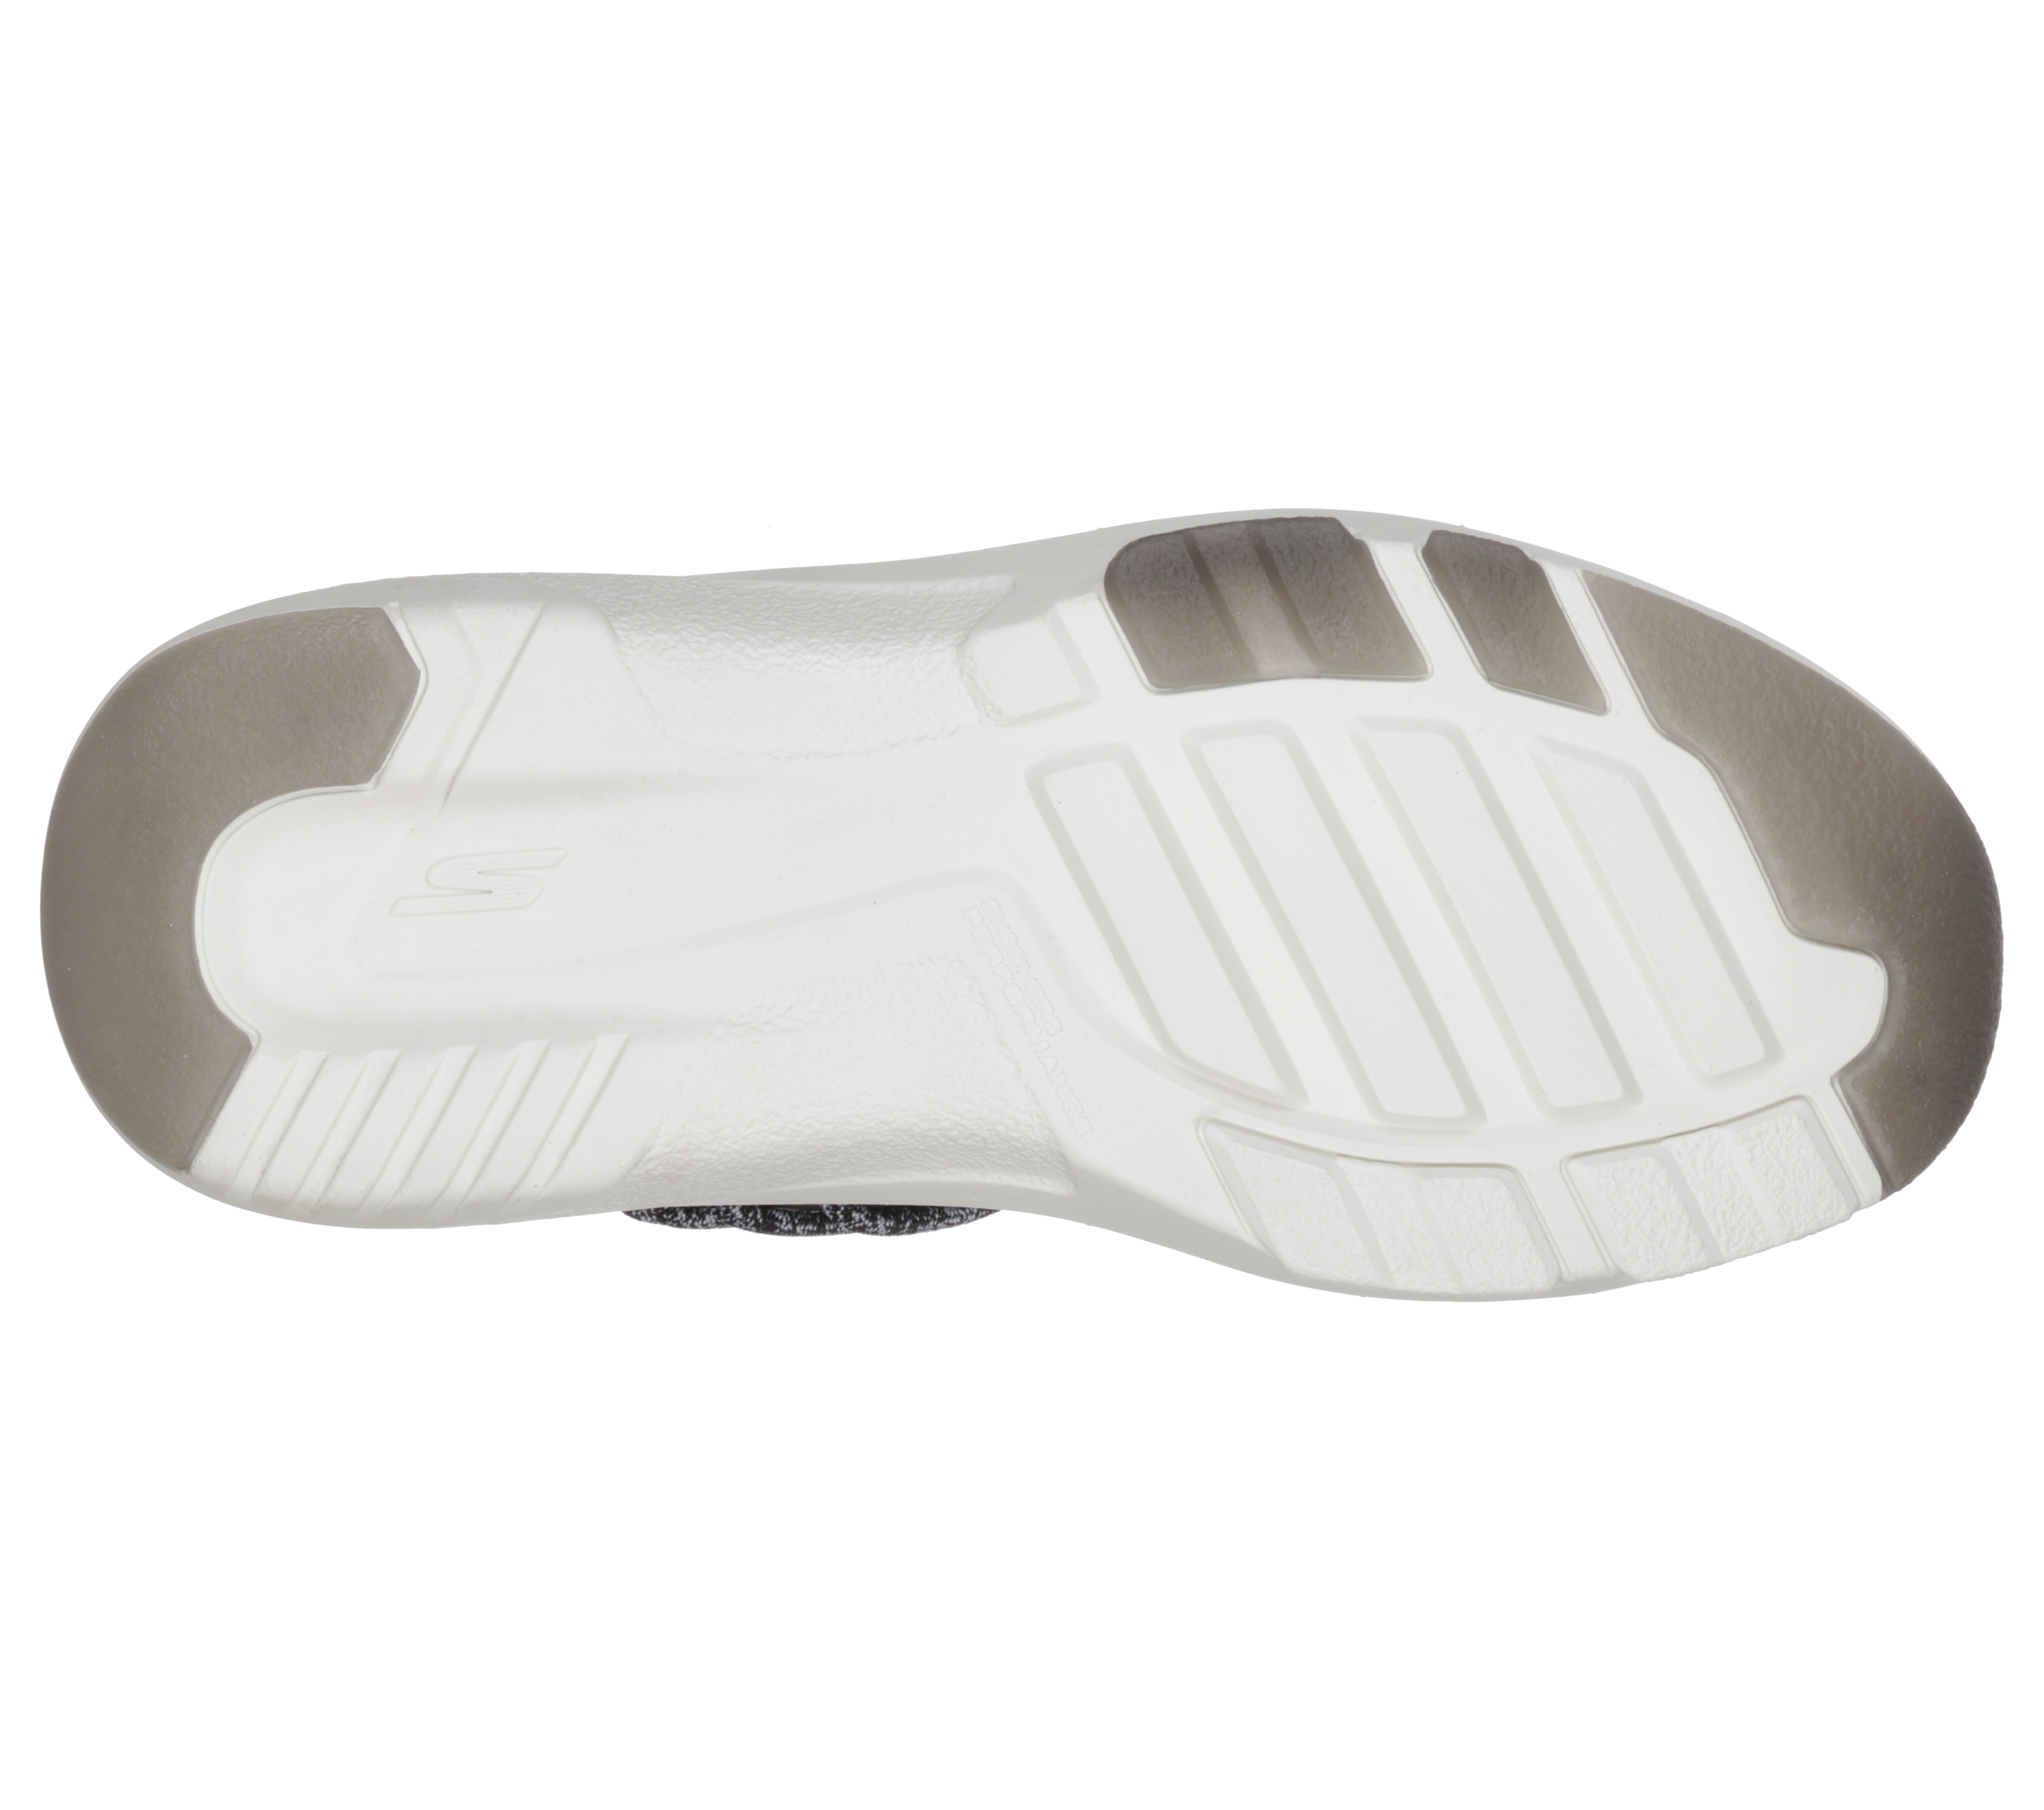 Giày nữ Skechers 18001-LIFESTYLE-BKW